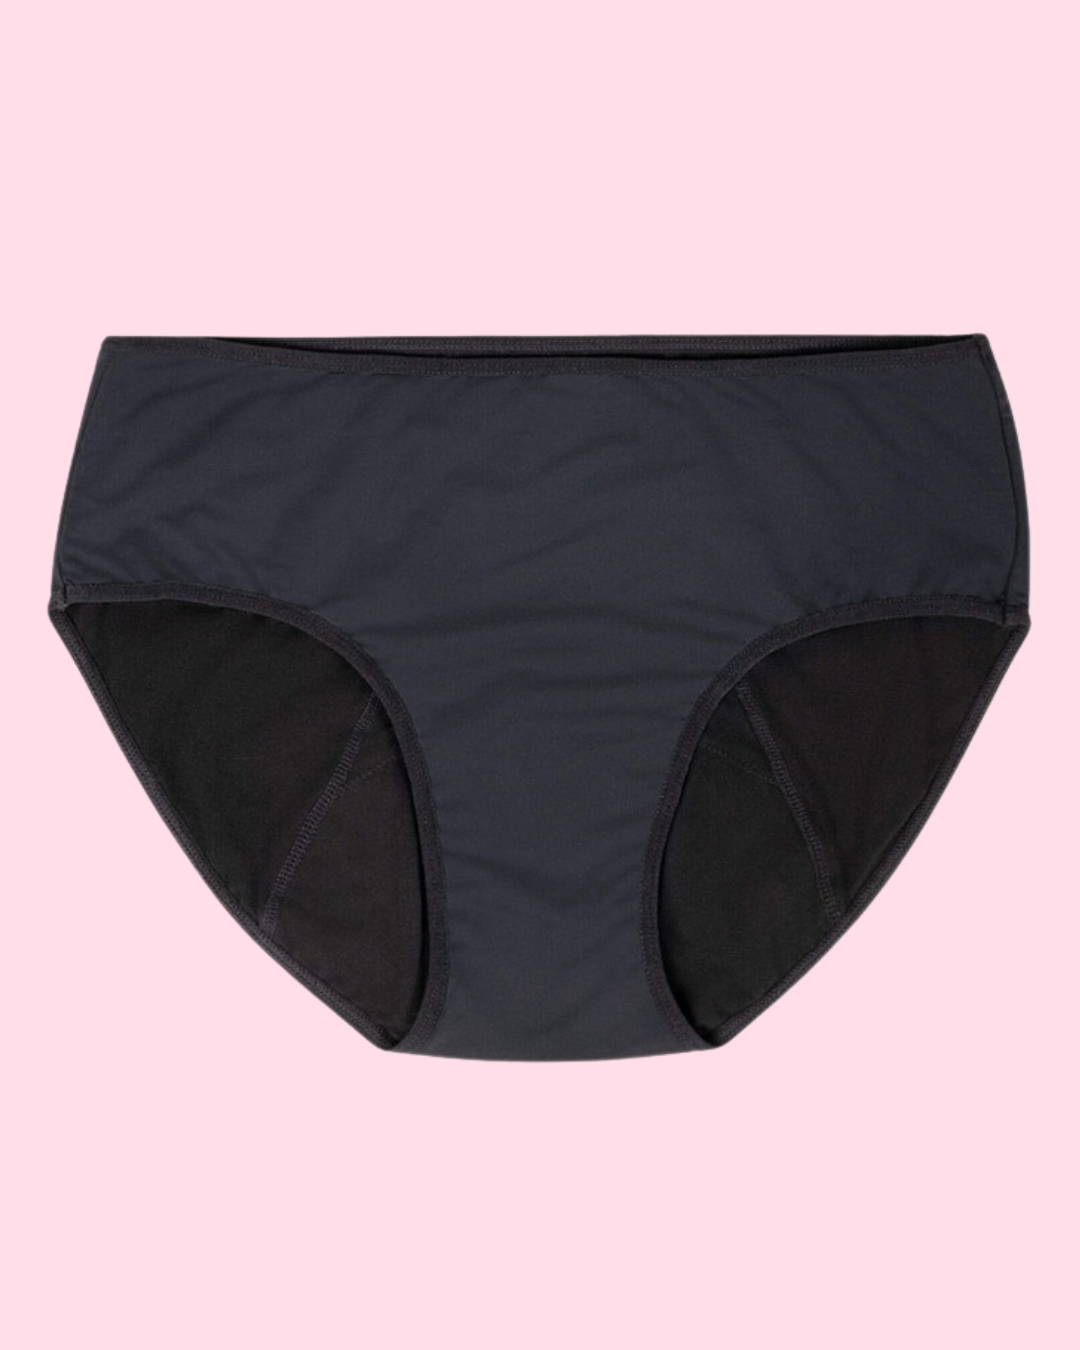 Reusable Period Panty – Fempure